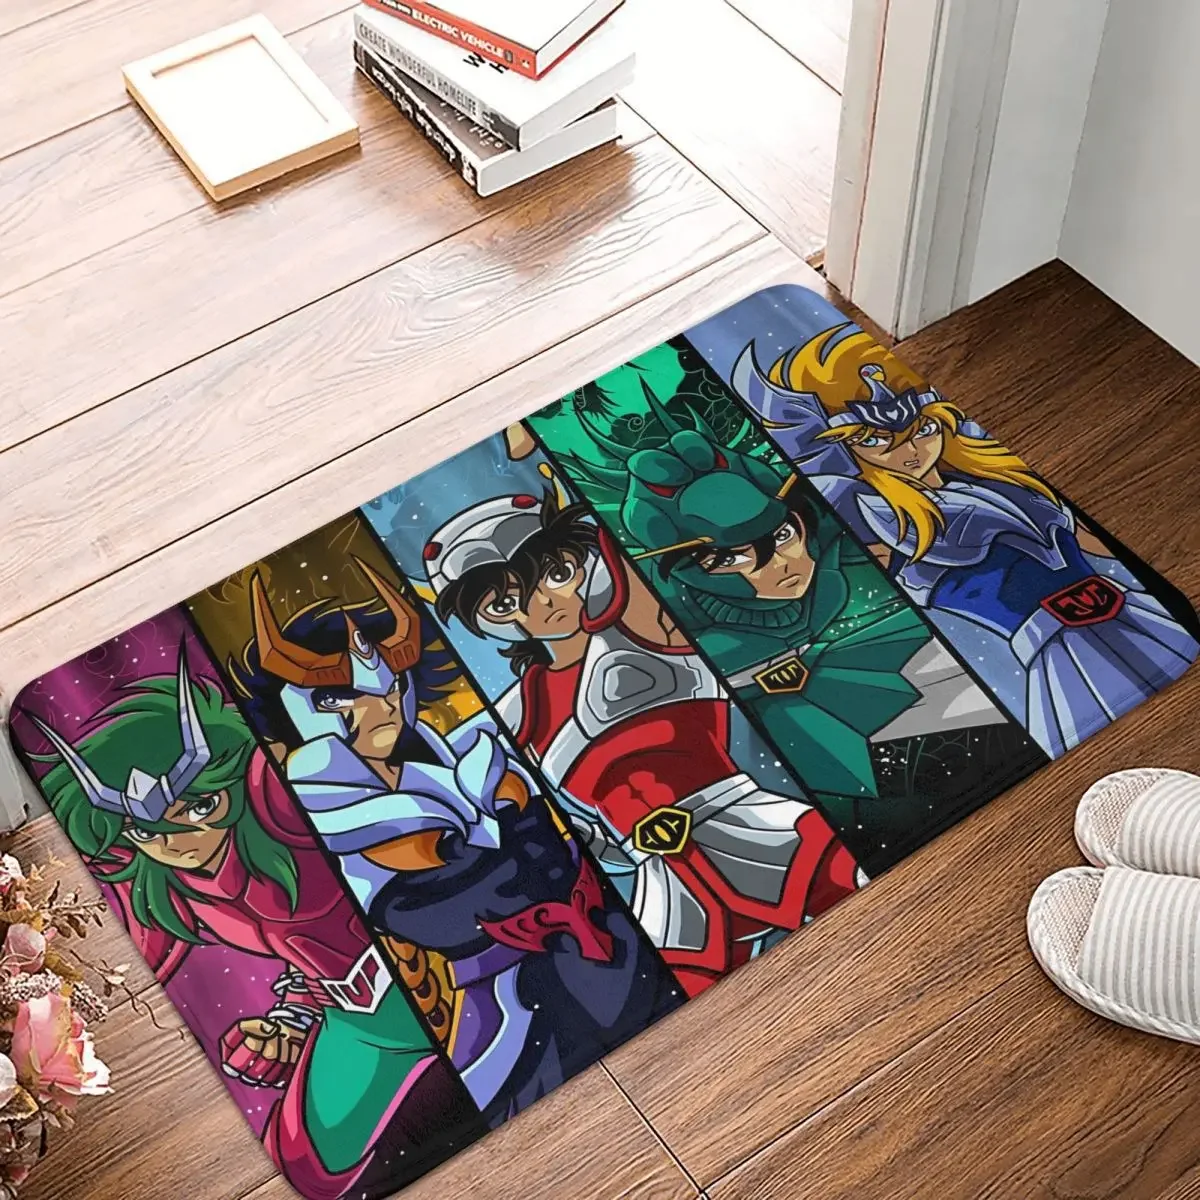 

Saint Seiya Knights of the Zodiac Anime Bath Mat Character Rug Home Doormat Kitchen Carpet Entrance Door